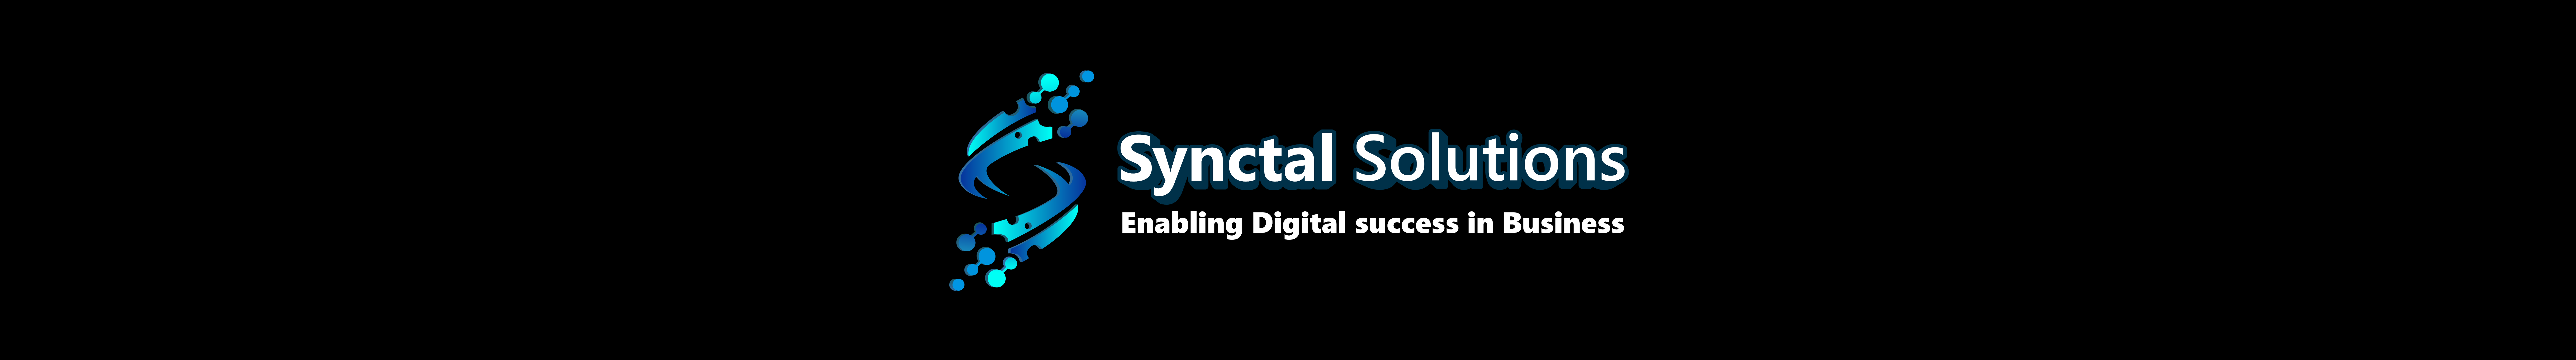 Баннер профиля Synctal Solutions